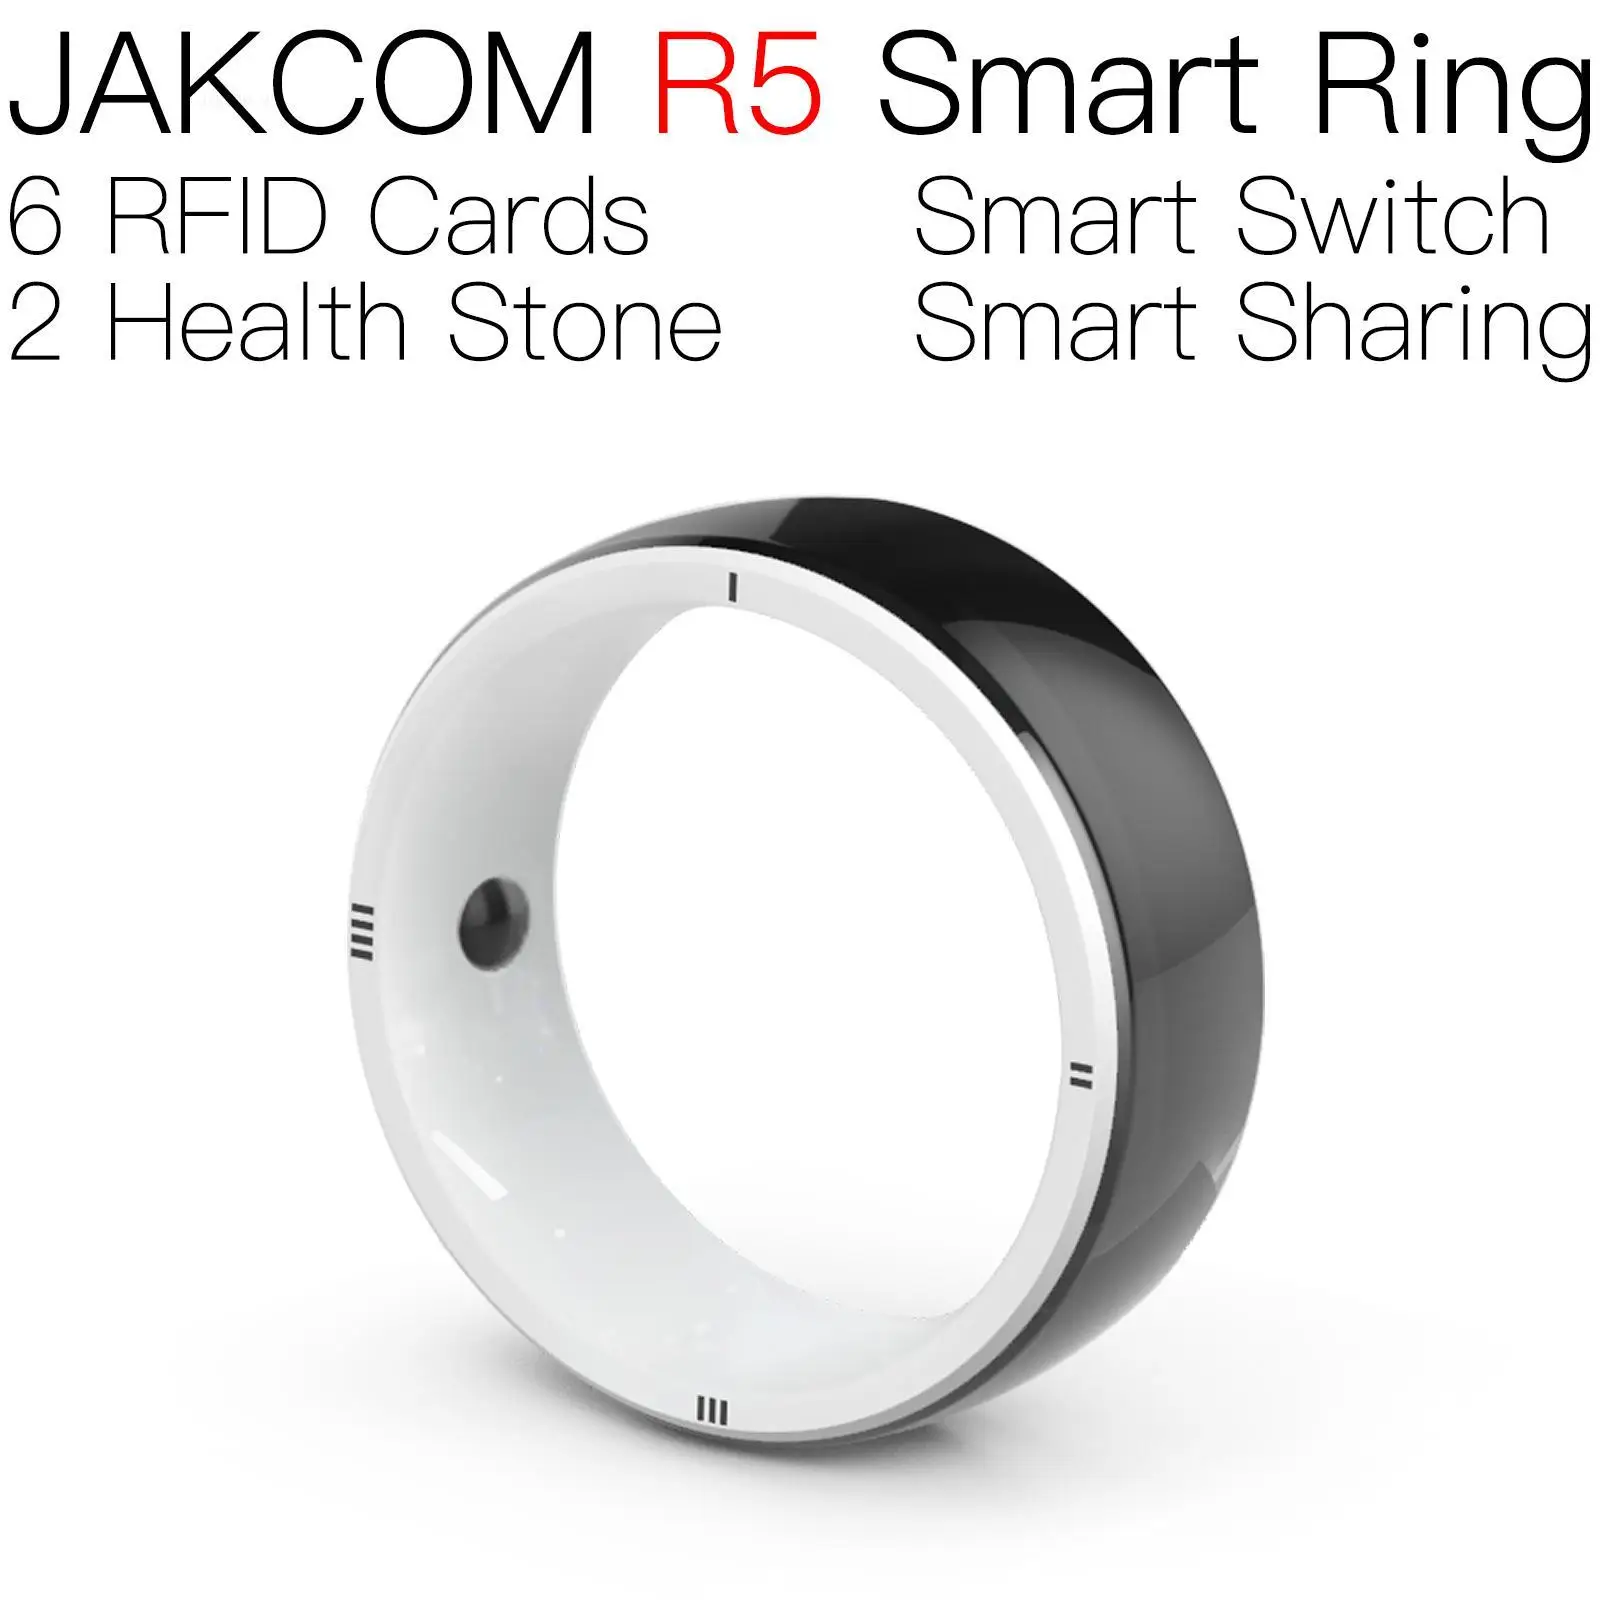 

JAKCOM R5 Smart Ring Newer than phones smart touch taghauer watch infinity figuras peter pan iso15693 pos nfs nfc